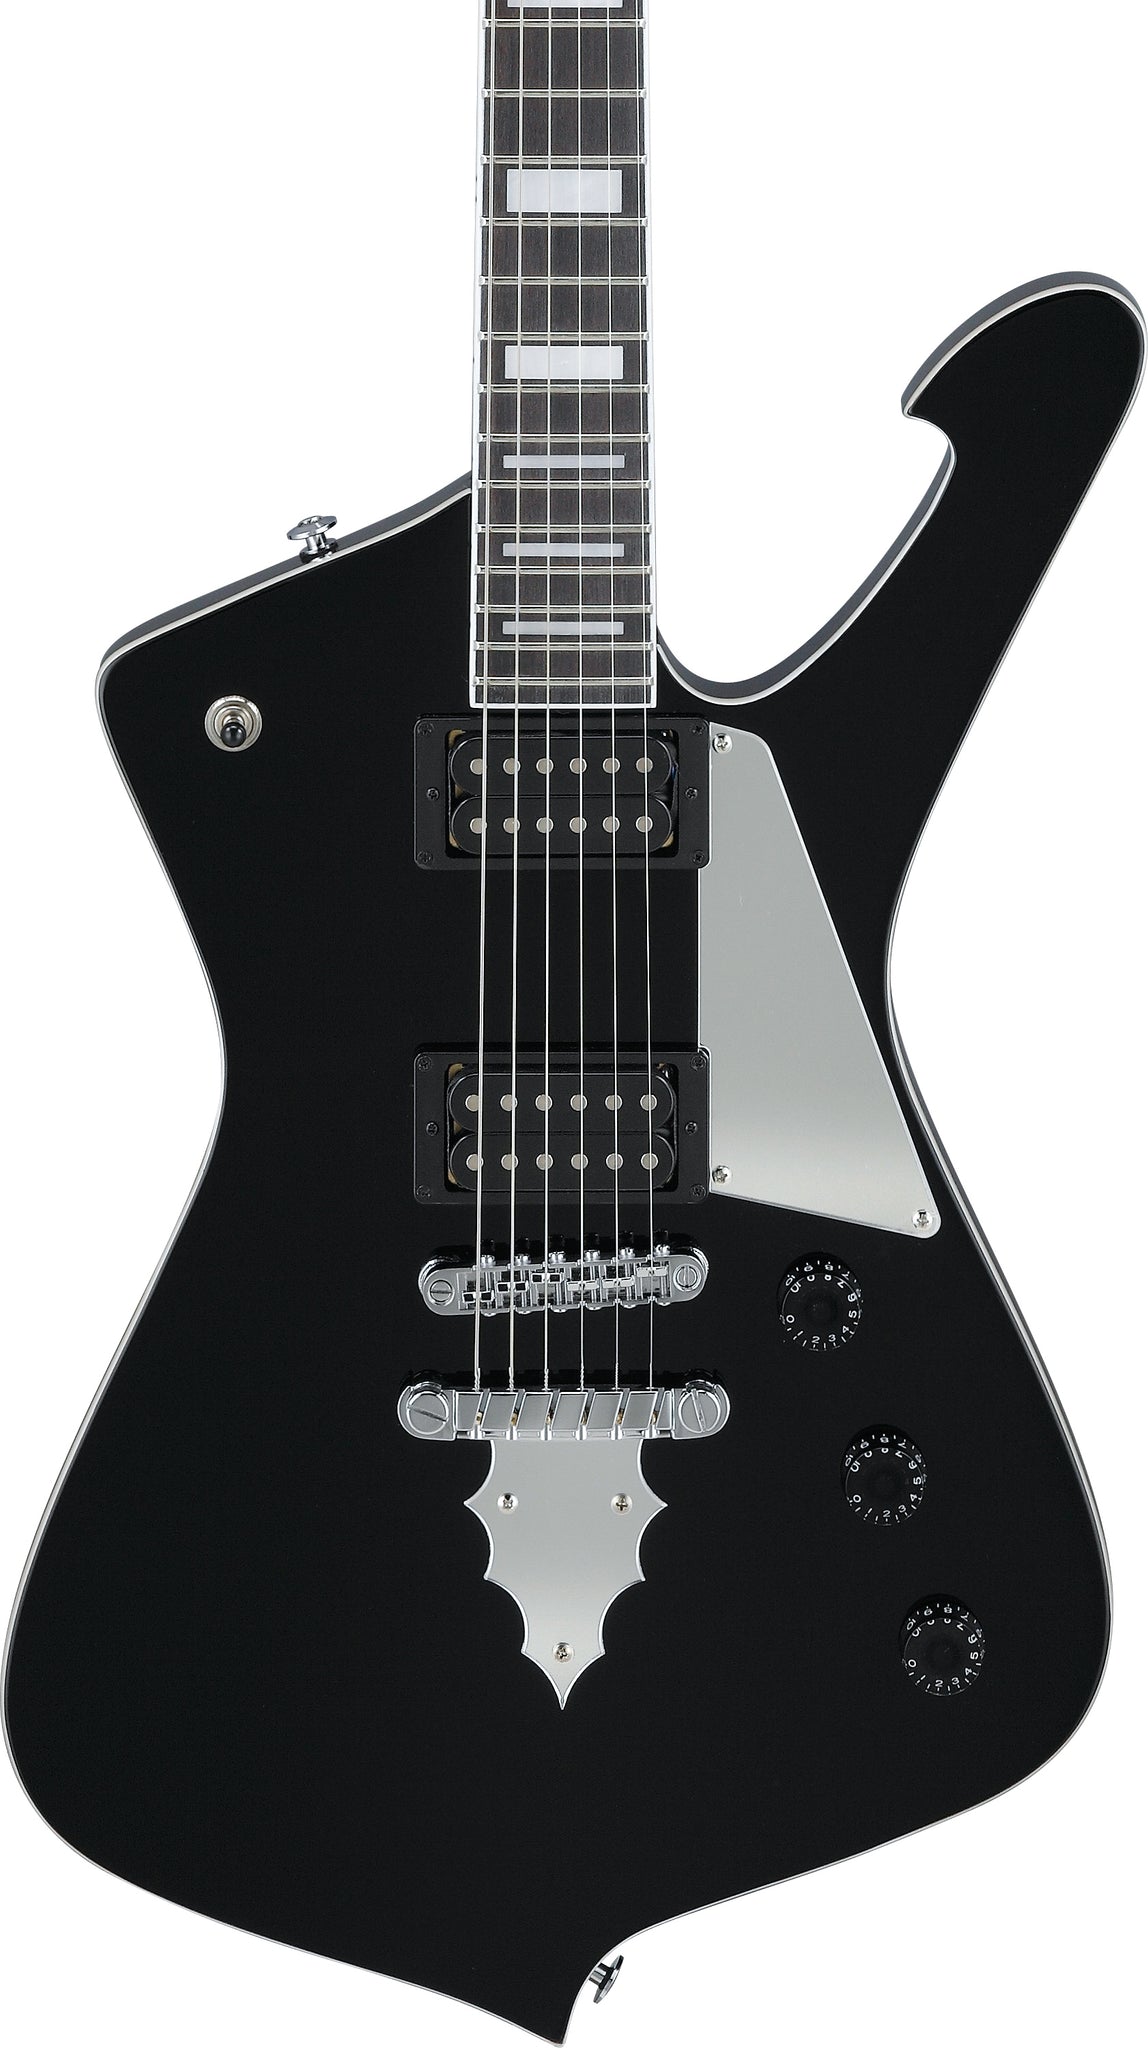 Ibanez PS60BK Paul Stanley Signature Iceman Electric Guitar (Black)